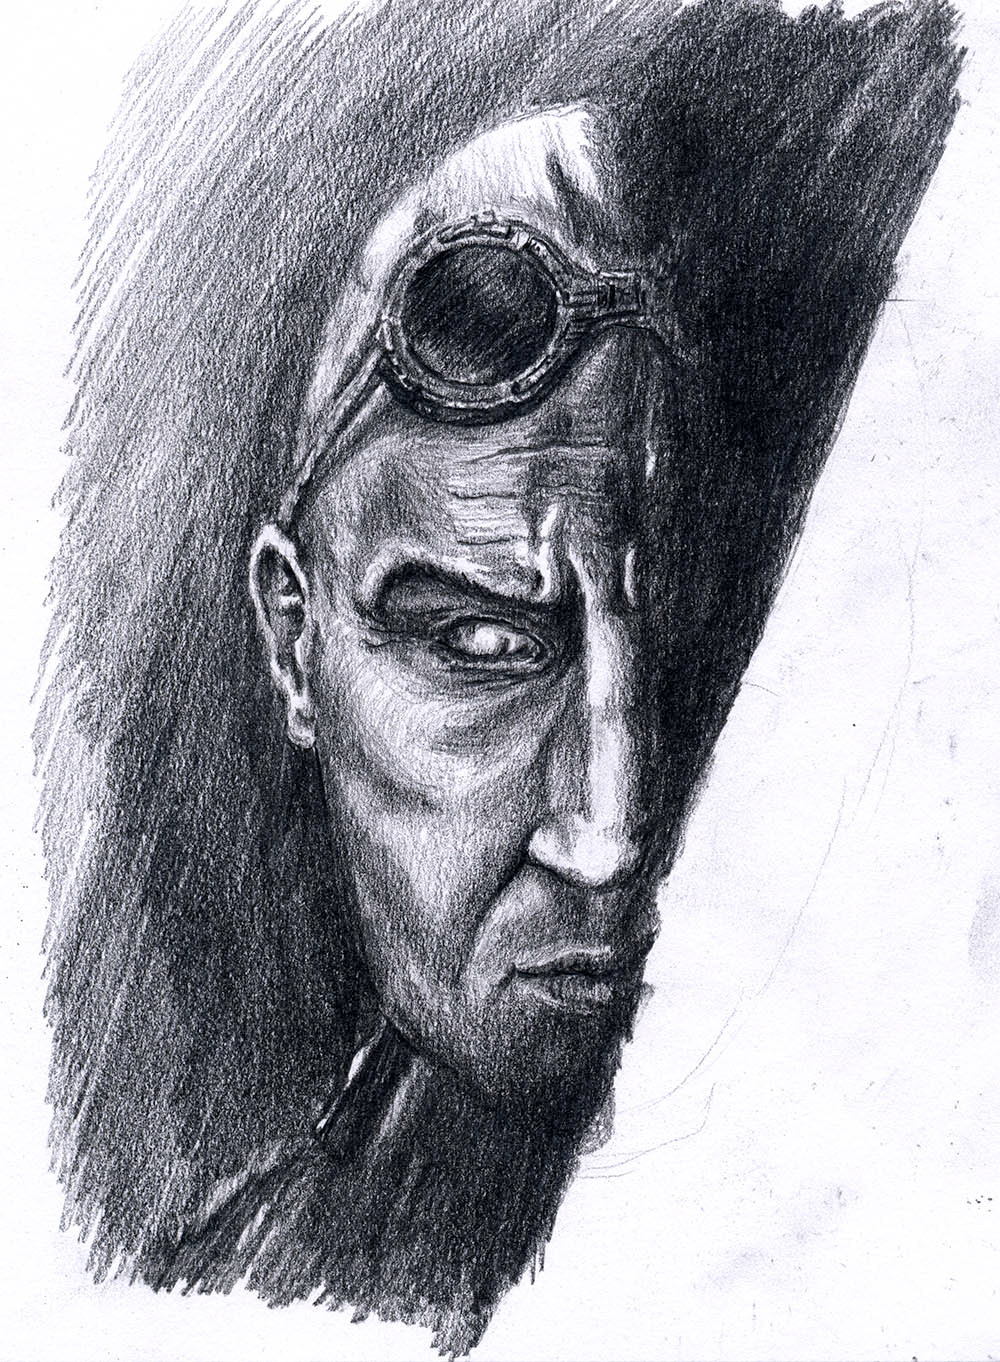 movie poster poster Riddick fan art challenge art hand-drawn